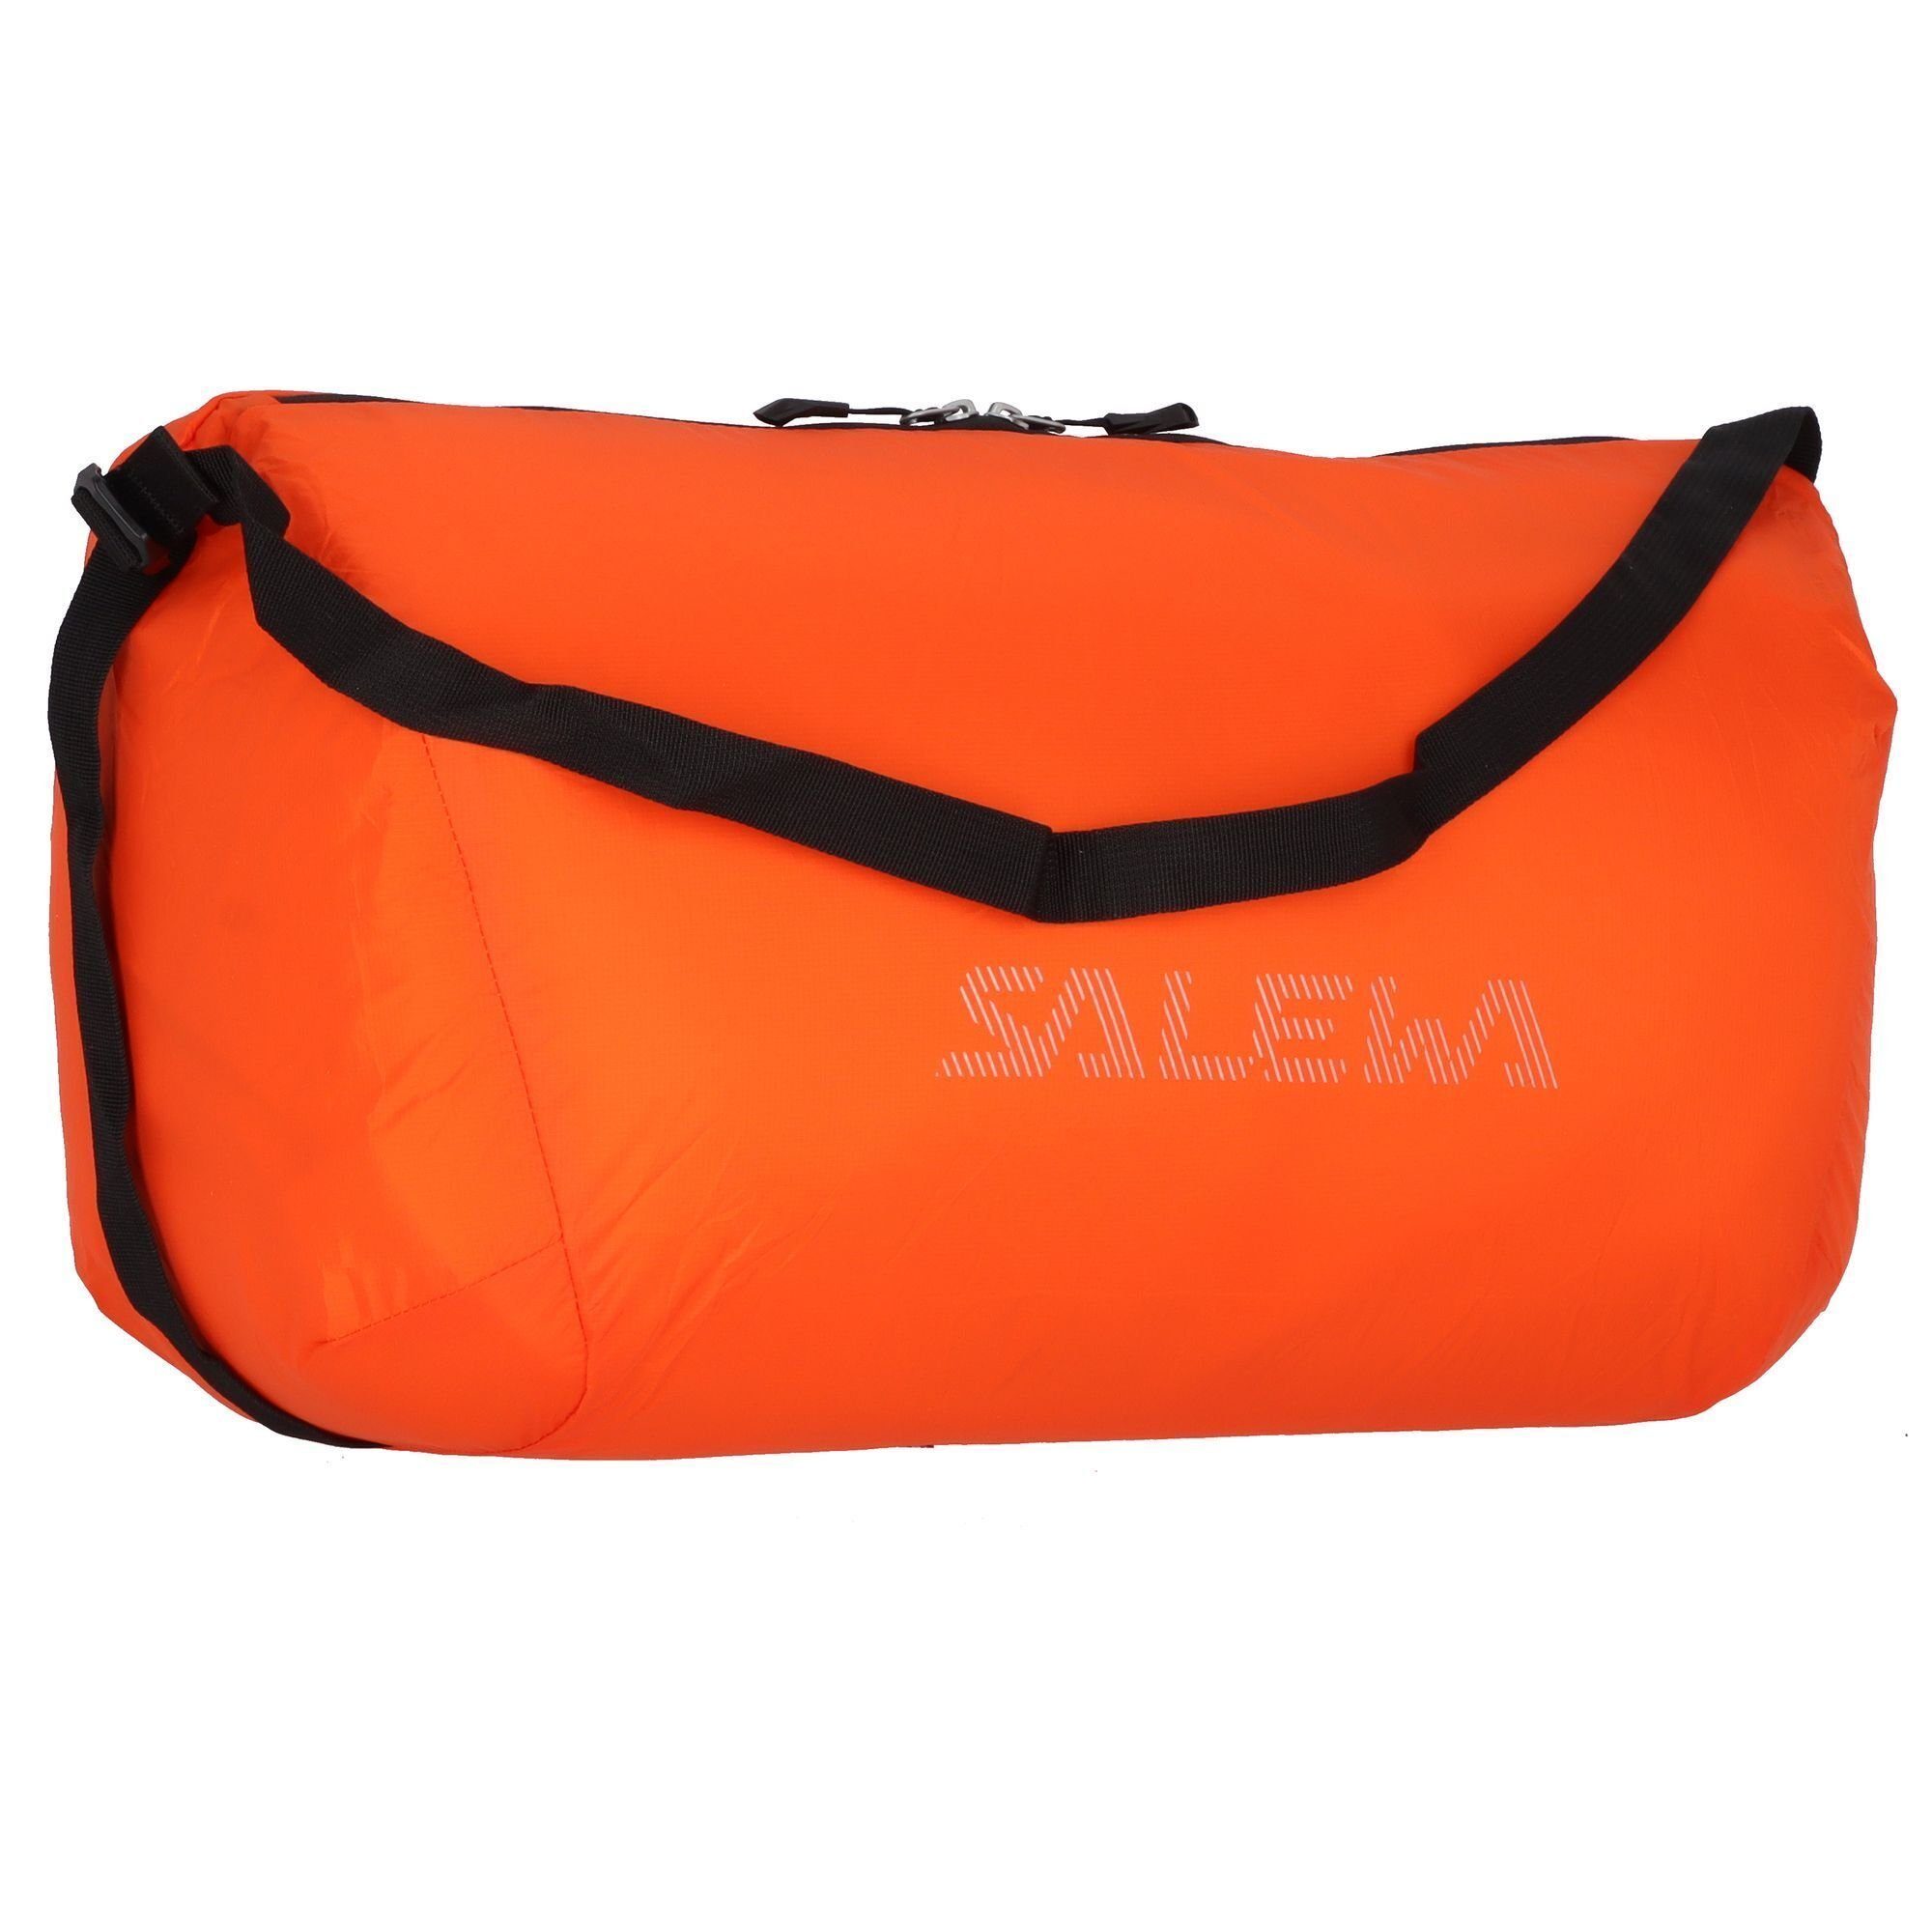 Salewa Reisetasche red Ultralight, orange Nylon